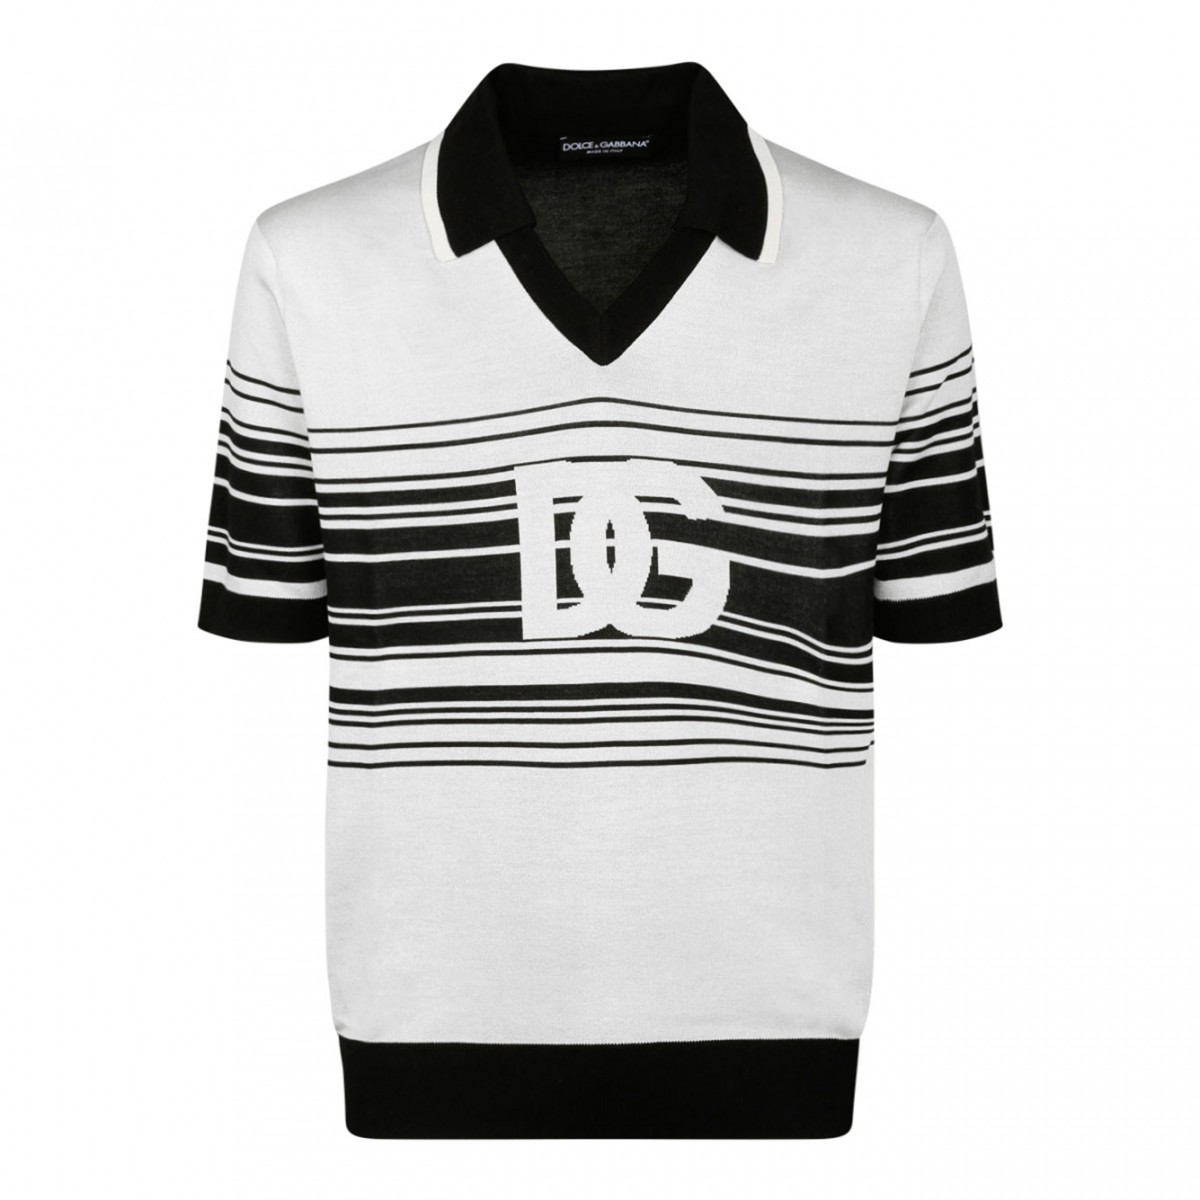 White and Black Jacquard Polo Shirt